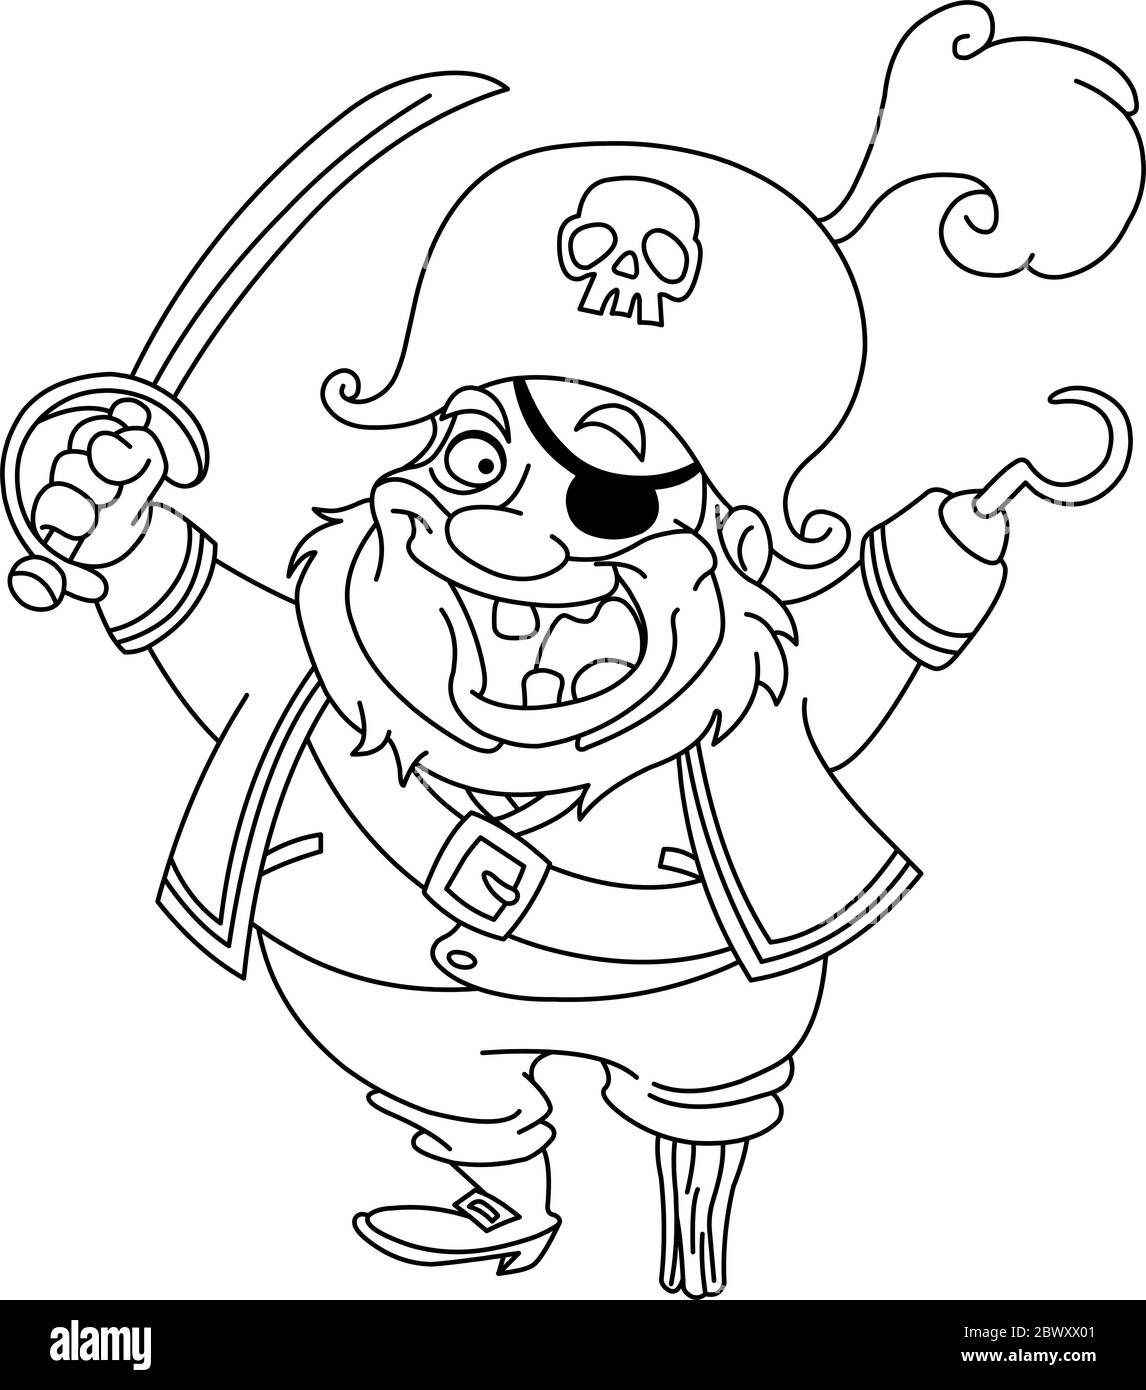 Skizzierte Cartoon Pirat. Vektorgrafik Malseite Stock Vektor